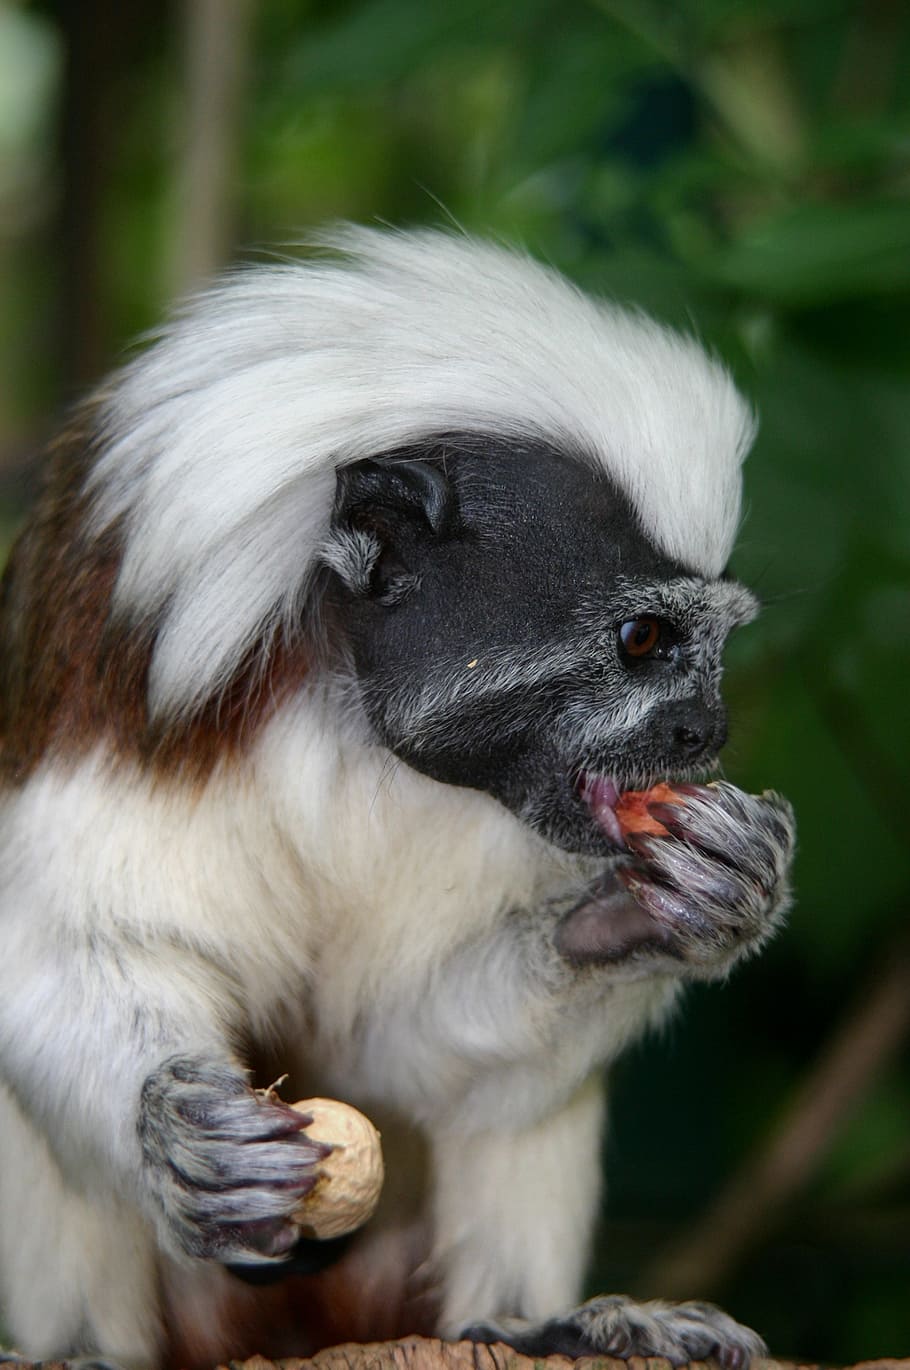 cottontop tamarin, monkey, animal, nature, zoo, animal world